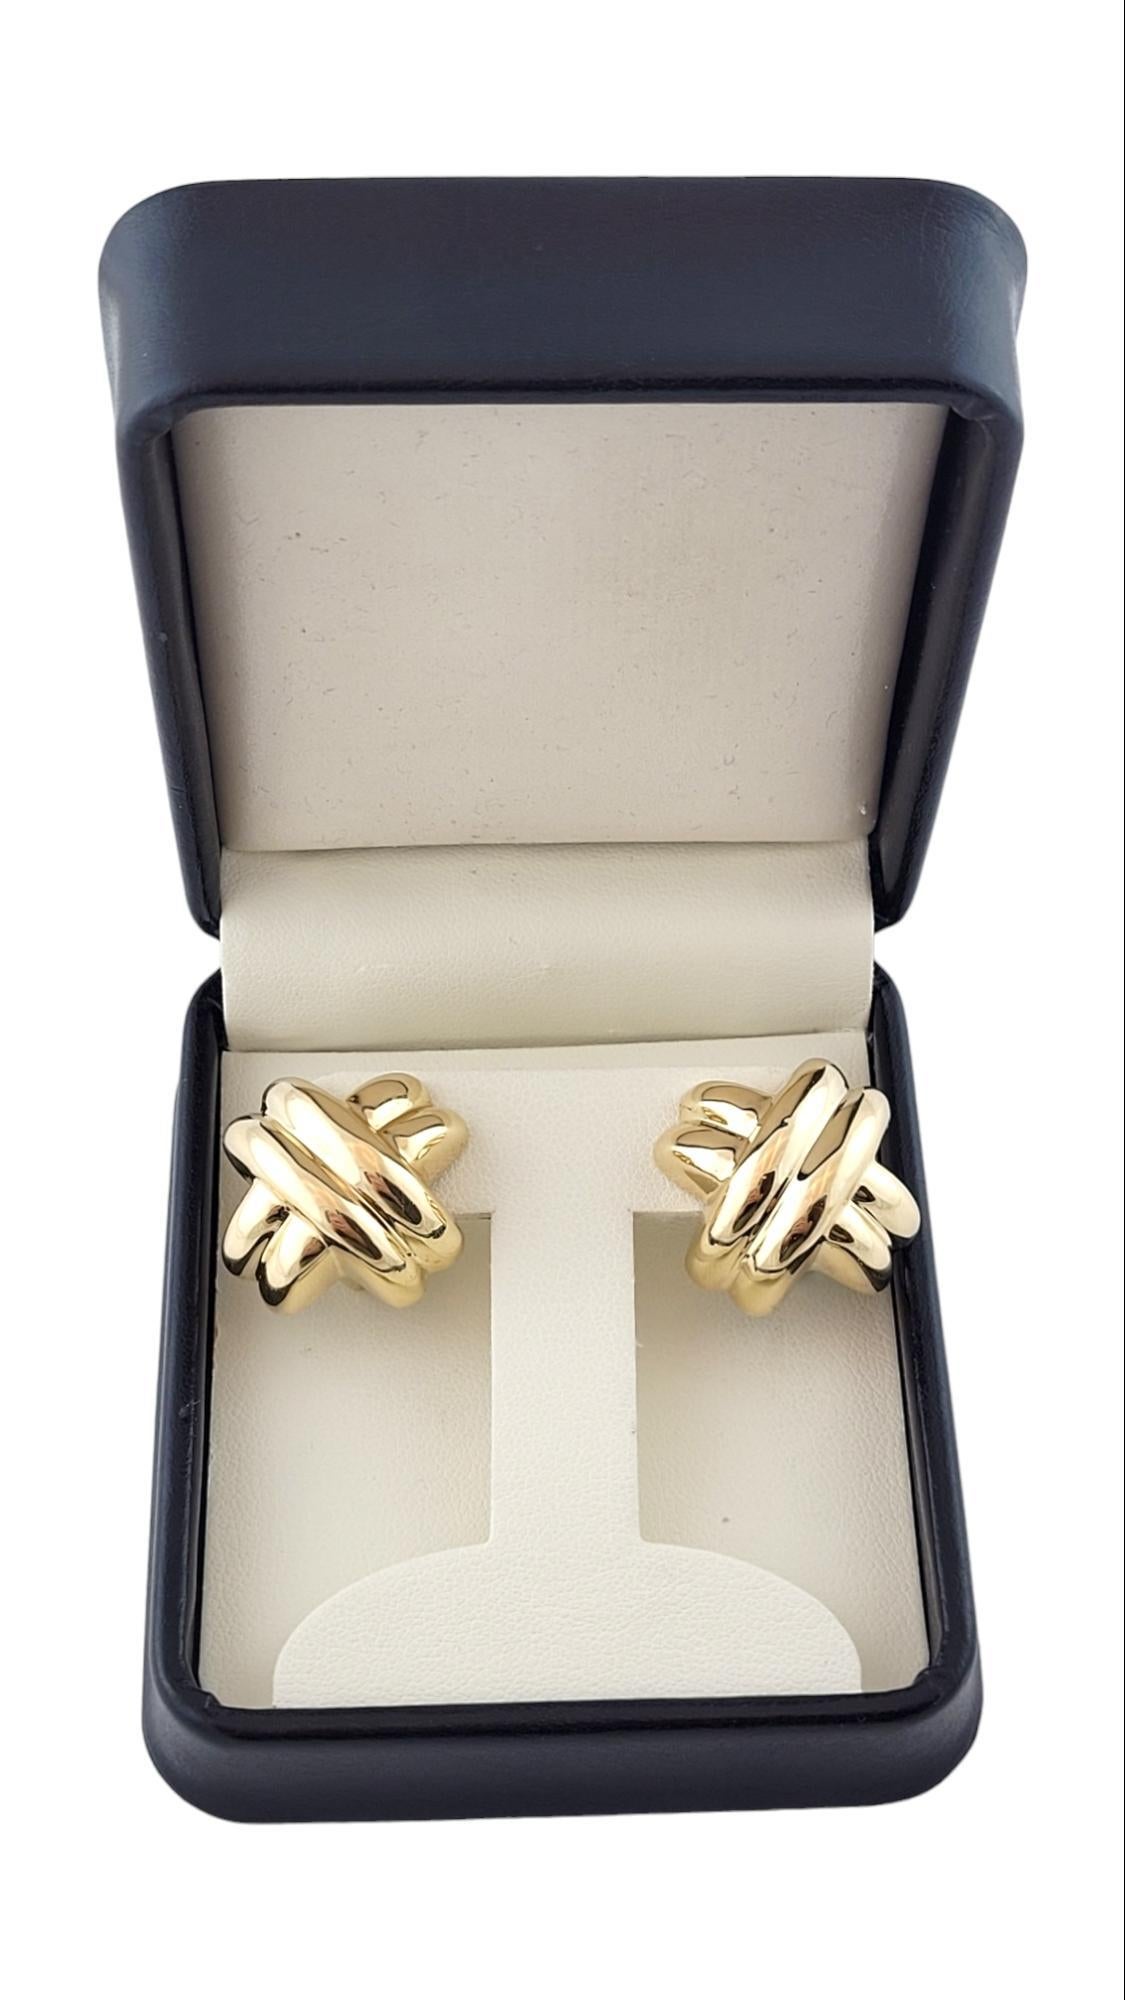 14K Yellow Gold X Stud Earrings w/ Lever Backs #15888 For Sale 3